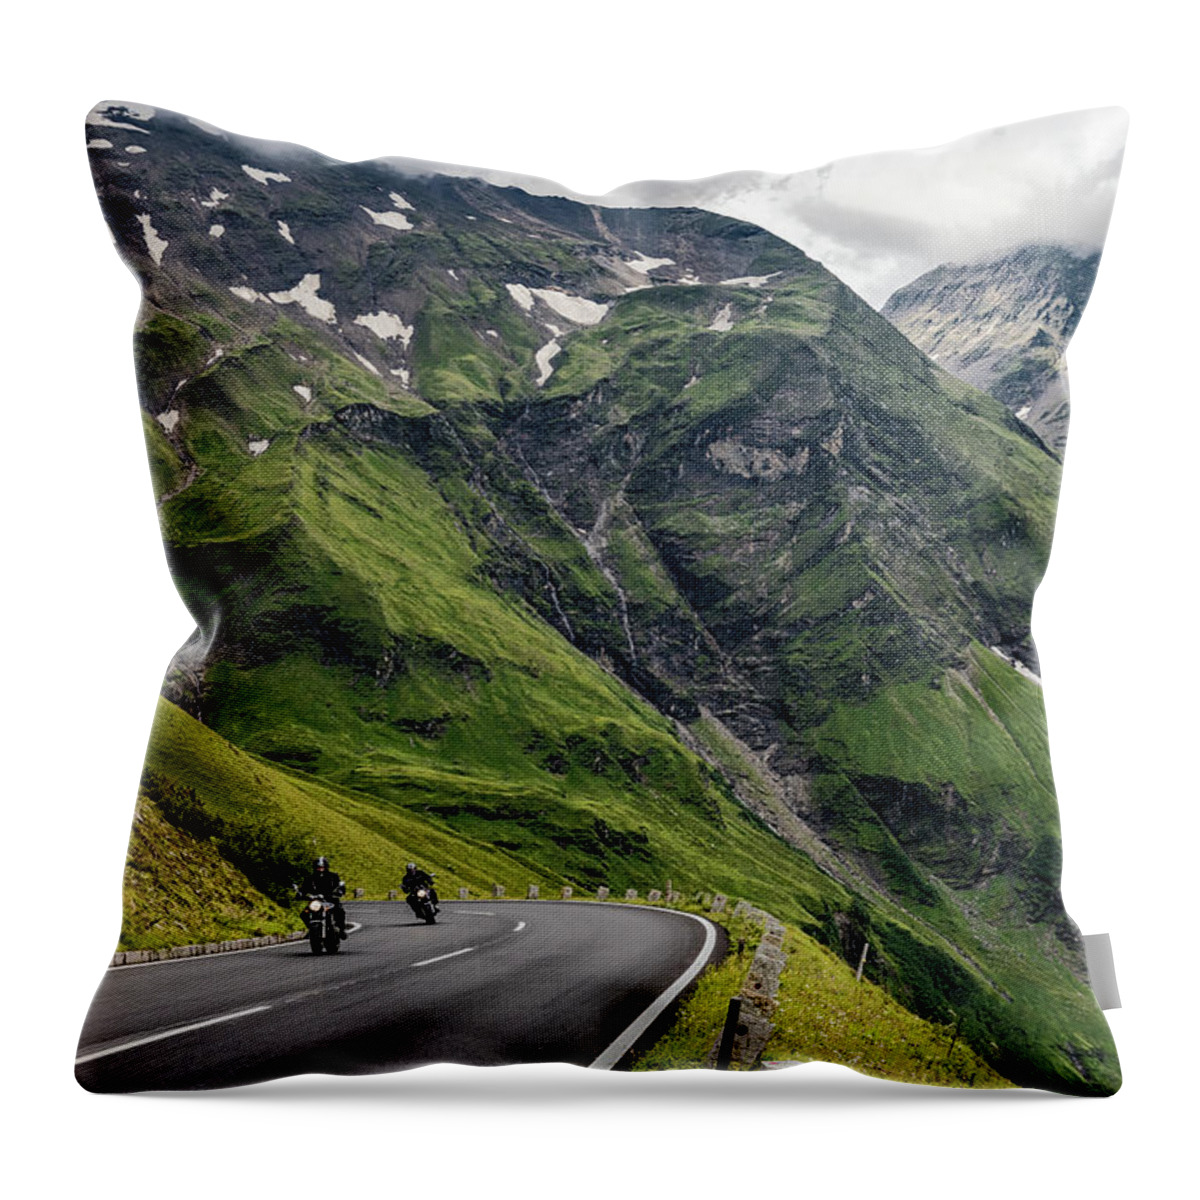 Grossglockner Throw Pillow featuring the photograph Grossglockner High Alpine Road, Austroa by Nir Roitman